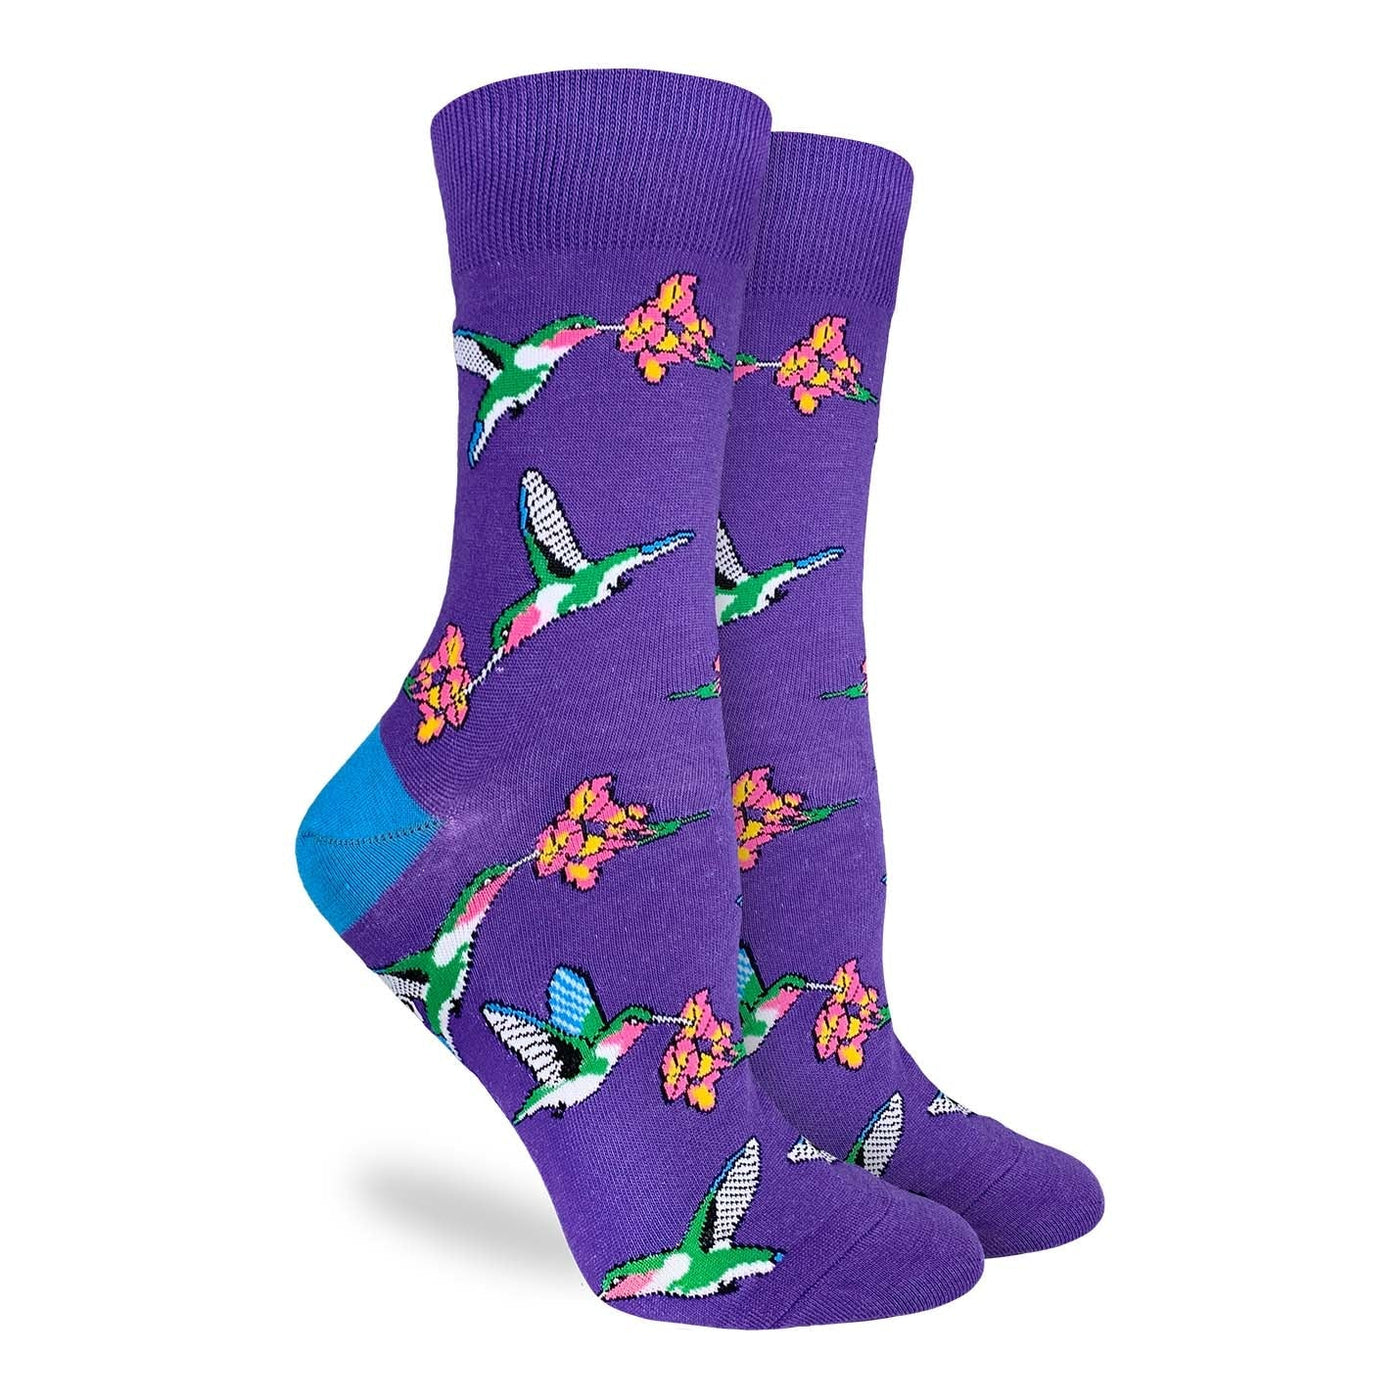 "Hummingbirds" Cotton Crew Socks by Good Luck Sock - Medium